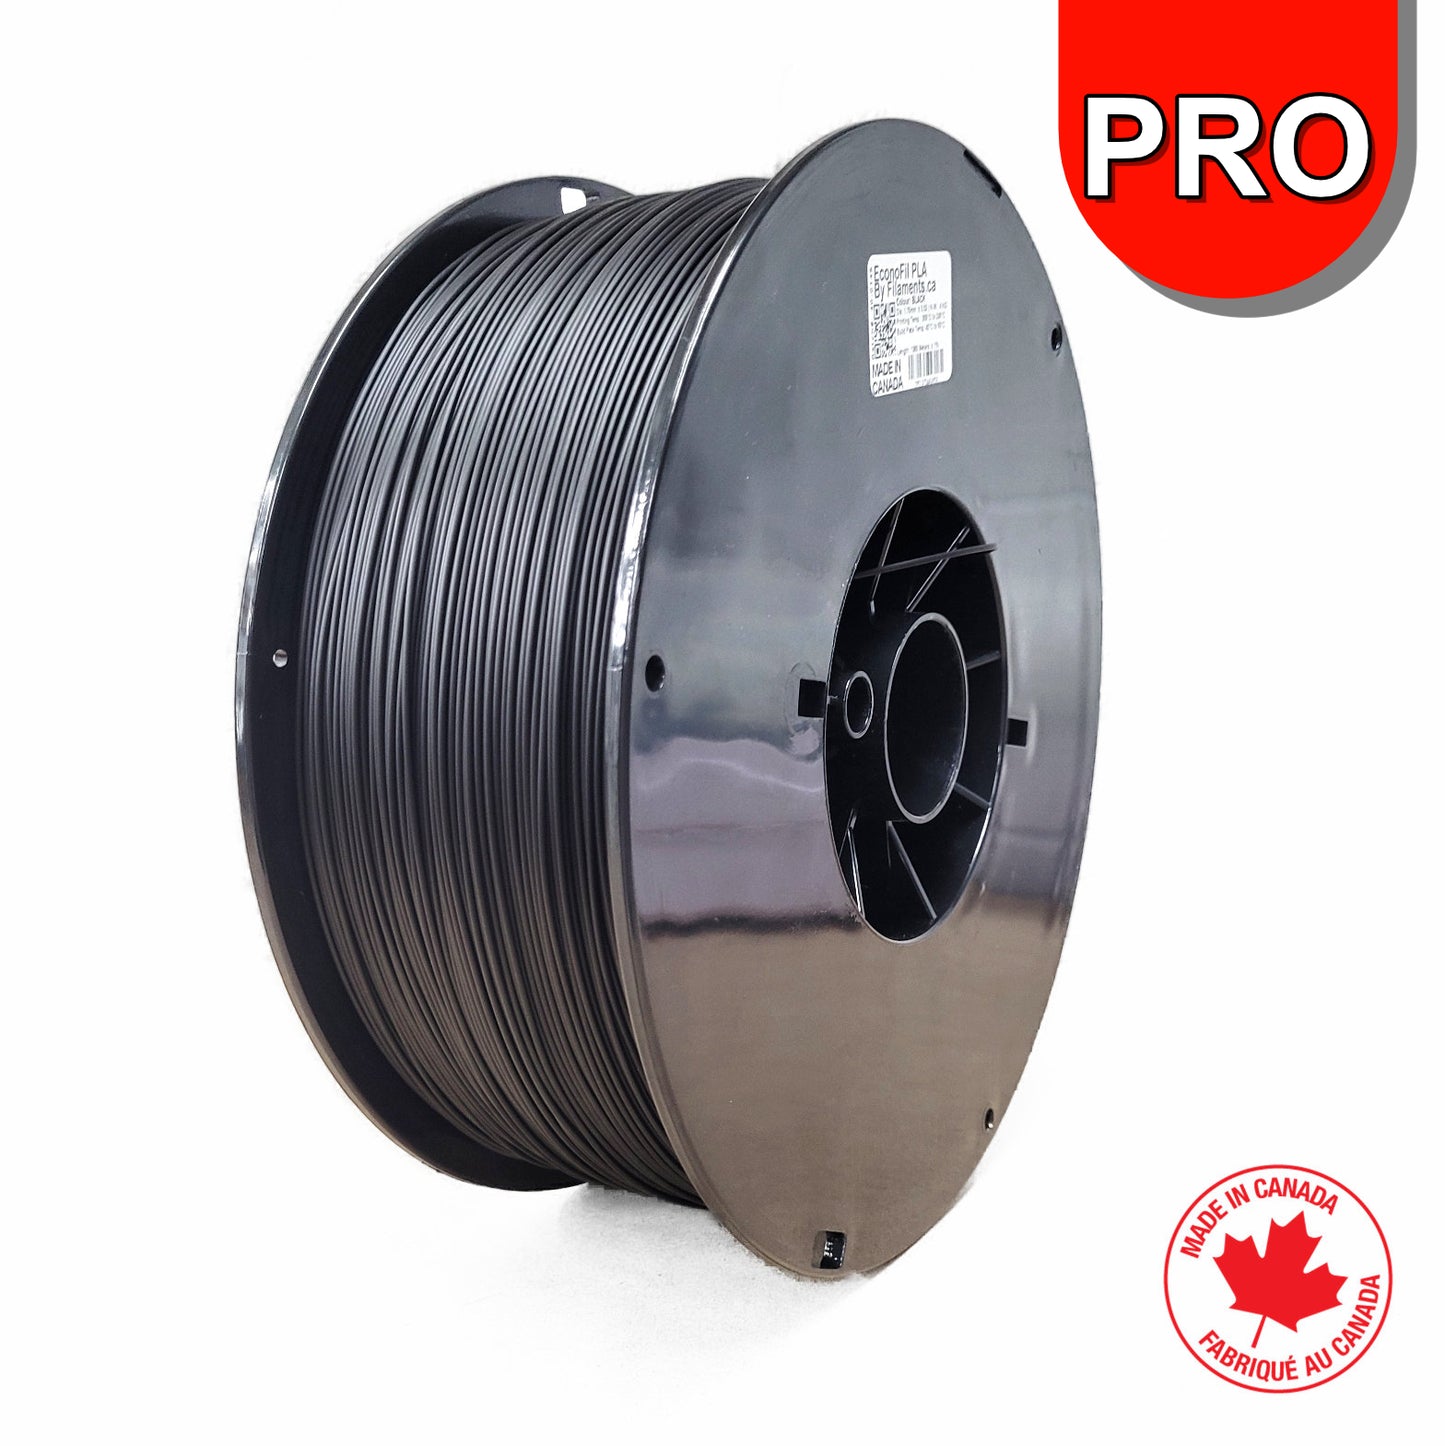 PLA PRO (Tough/High Impact) Filament - BLACK - 1.75mm - 4KG